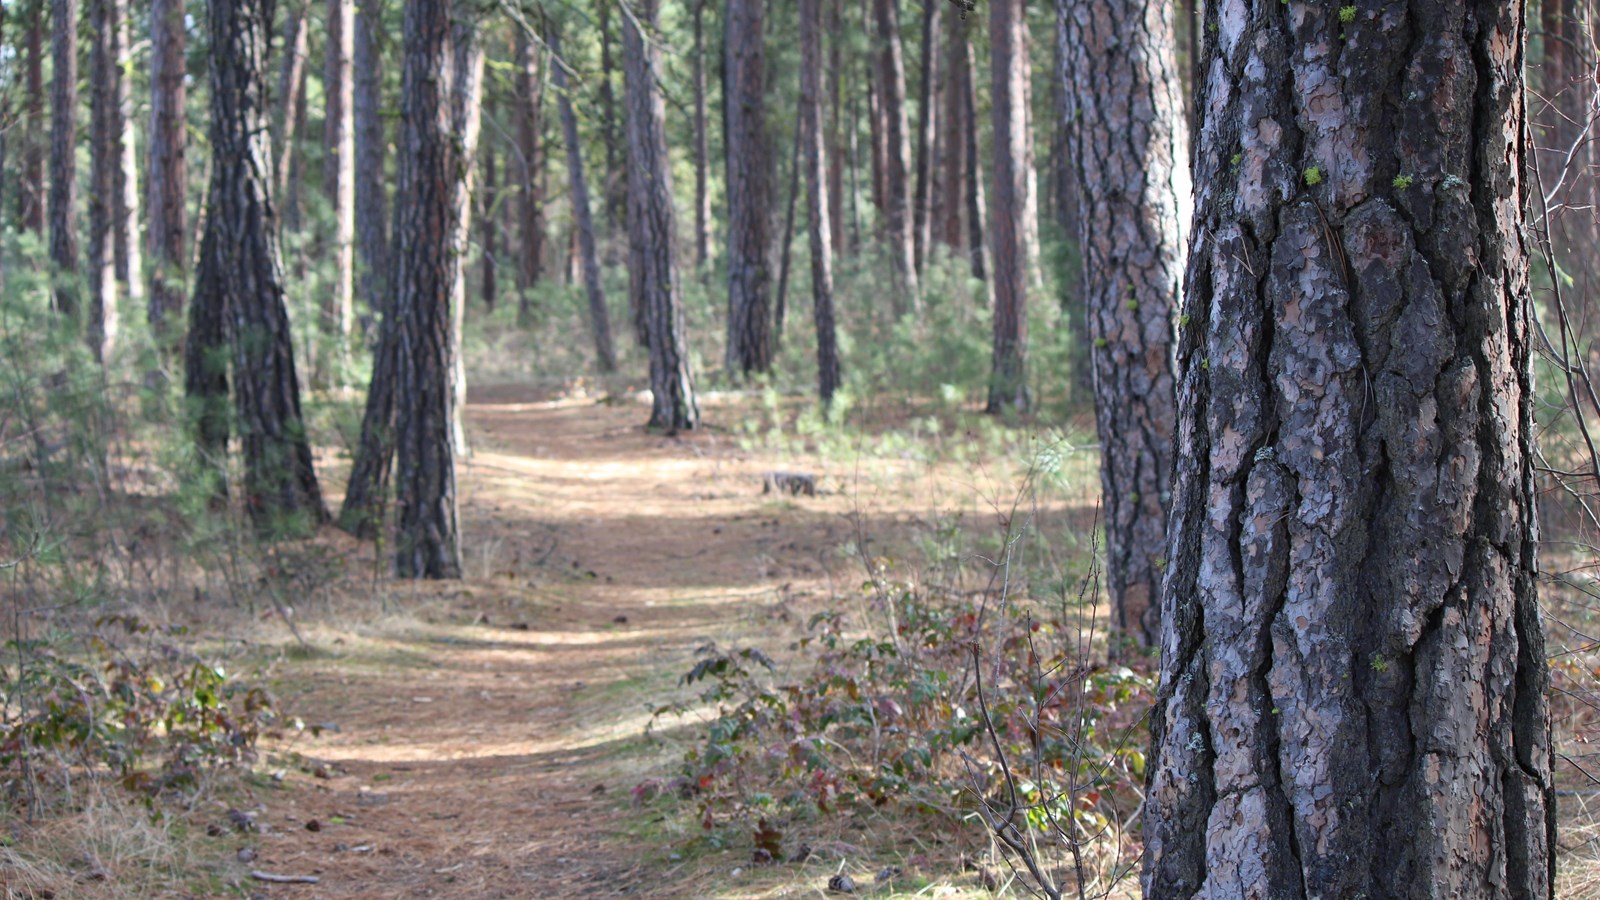 A dirt path winds through pine trees.